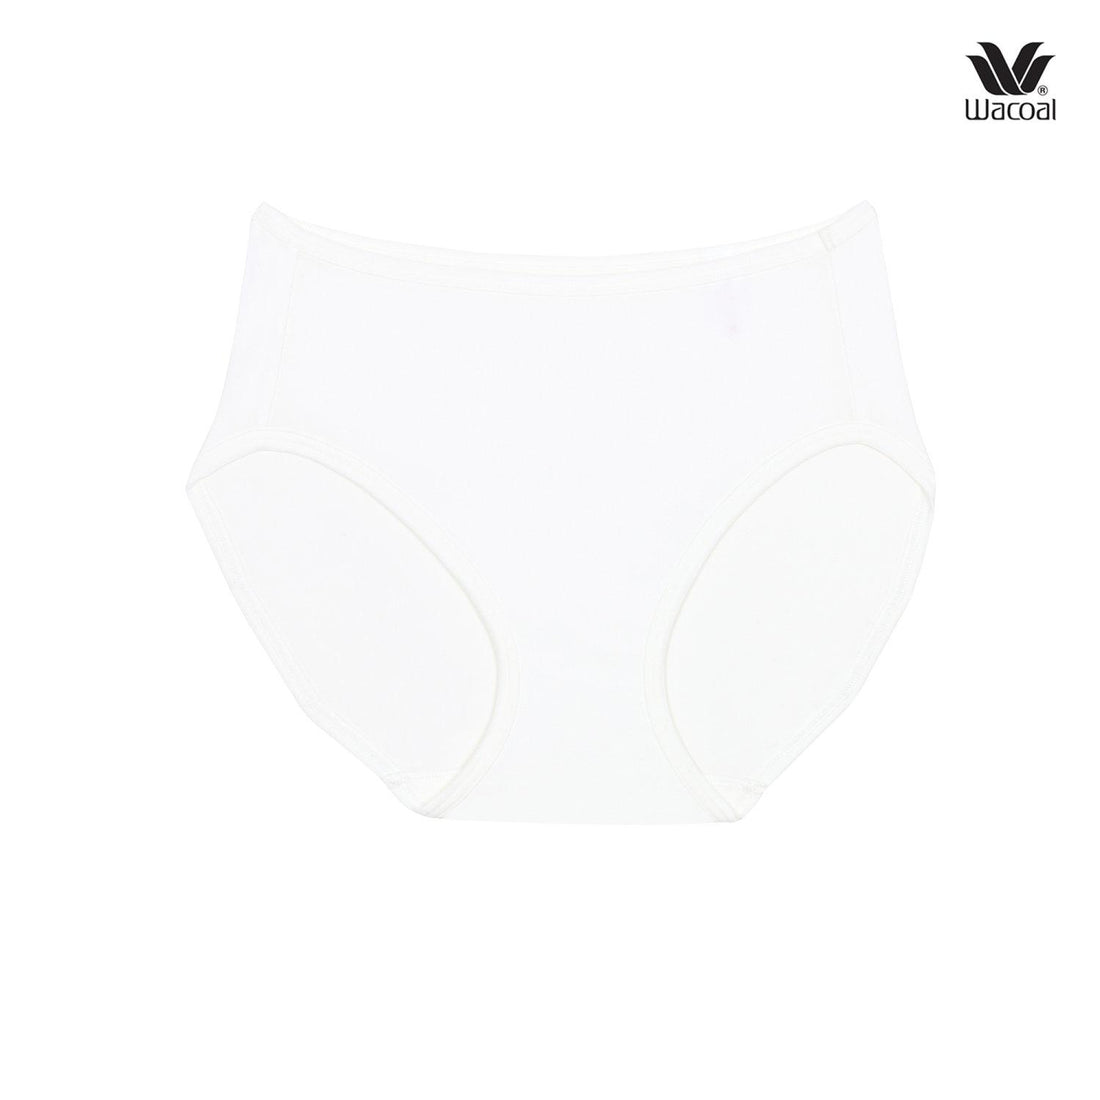 Wacoal Half Panty กางเกงในรูปแบบครึ่งตัว เซ็ต 3 ชิ้น รุ่น WU3287 สีครีม (CR)